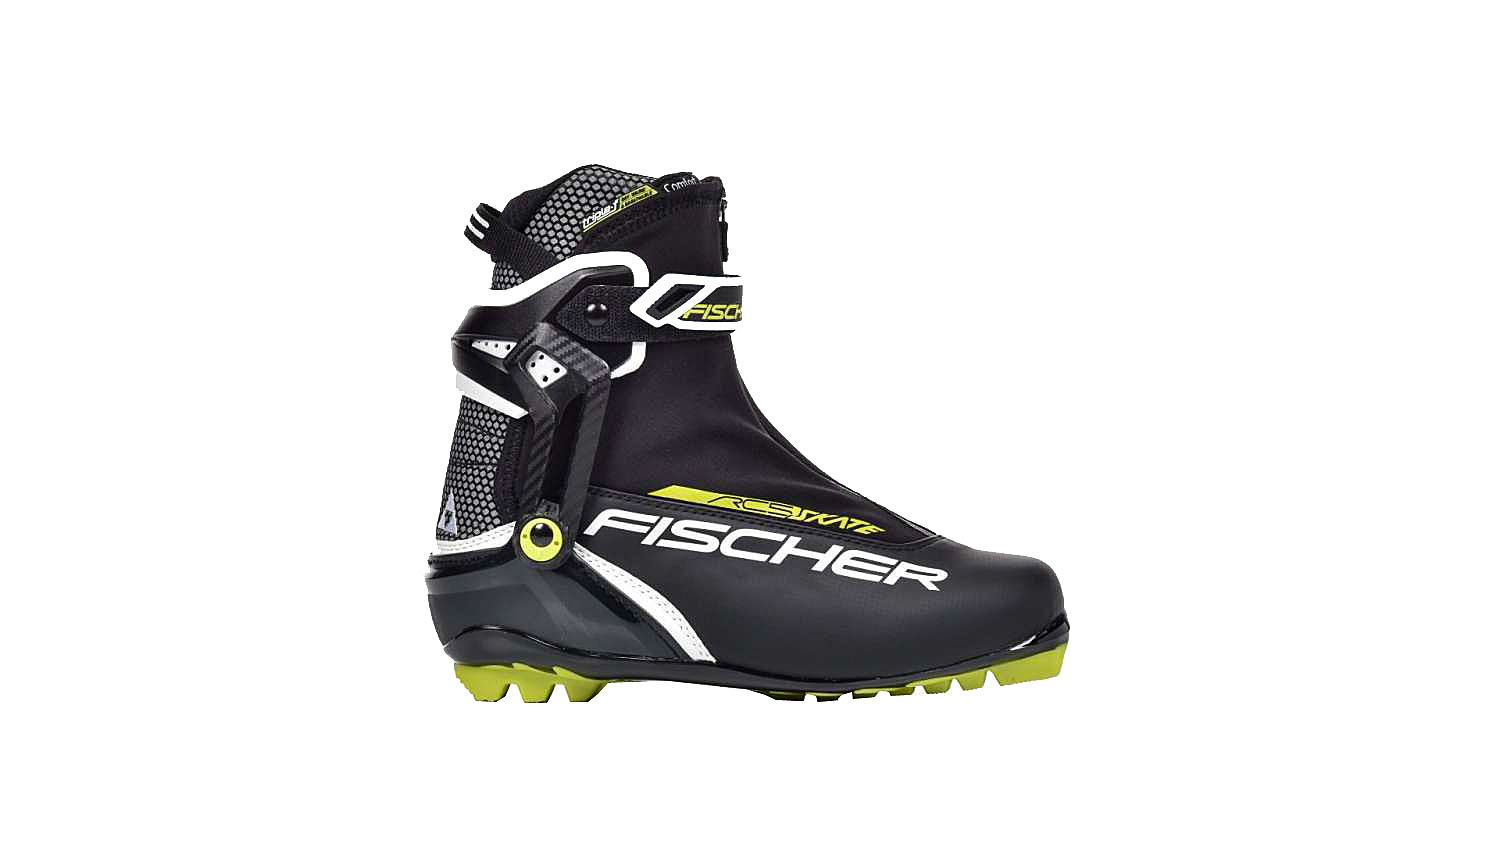 Ботинки лыжные FISCHER  RC 5 SKATE 17/18 S15417 43р (№3025)